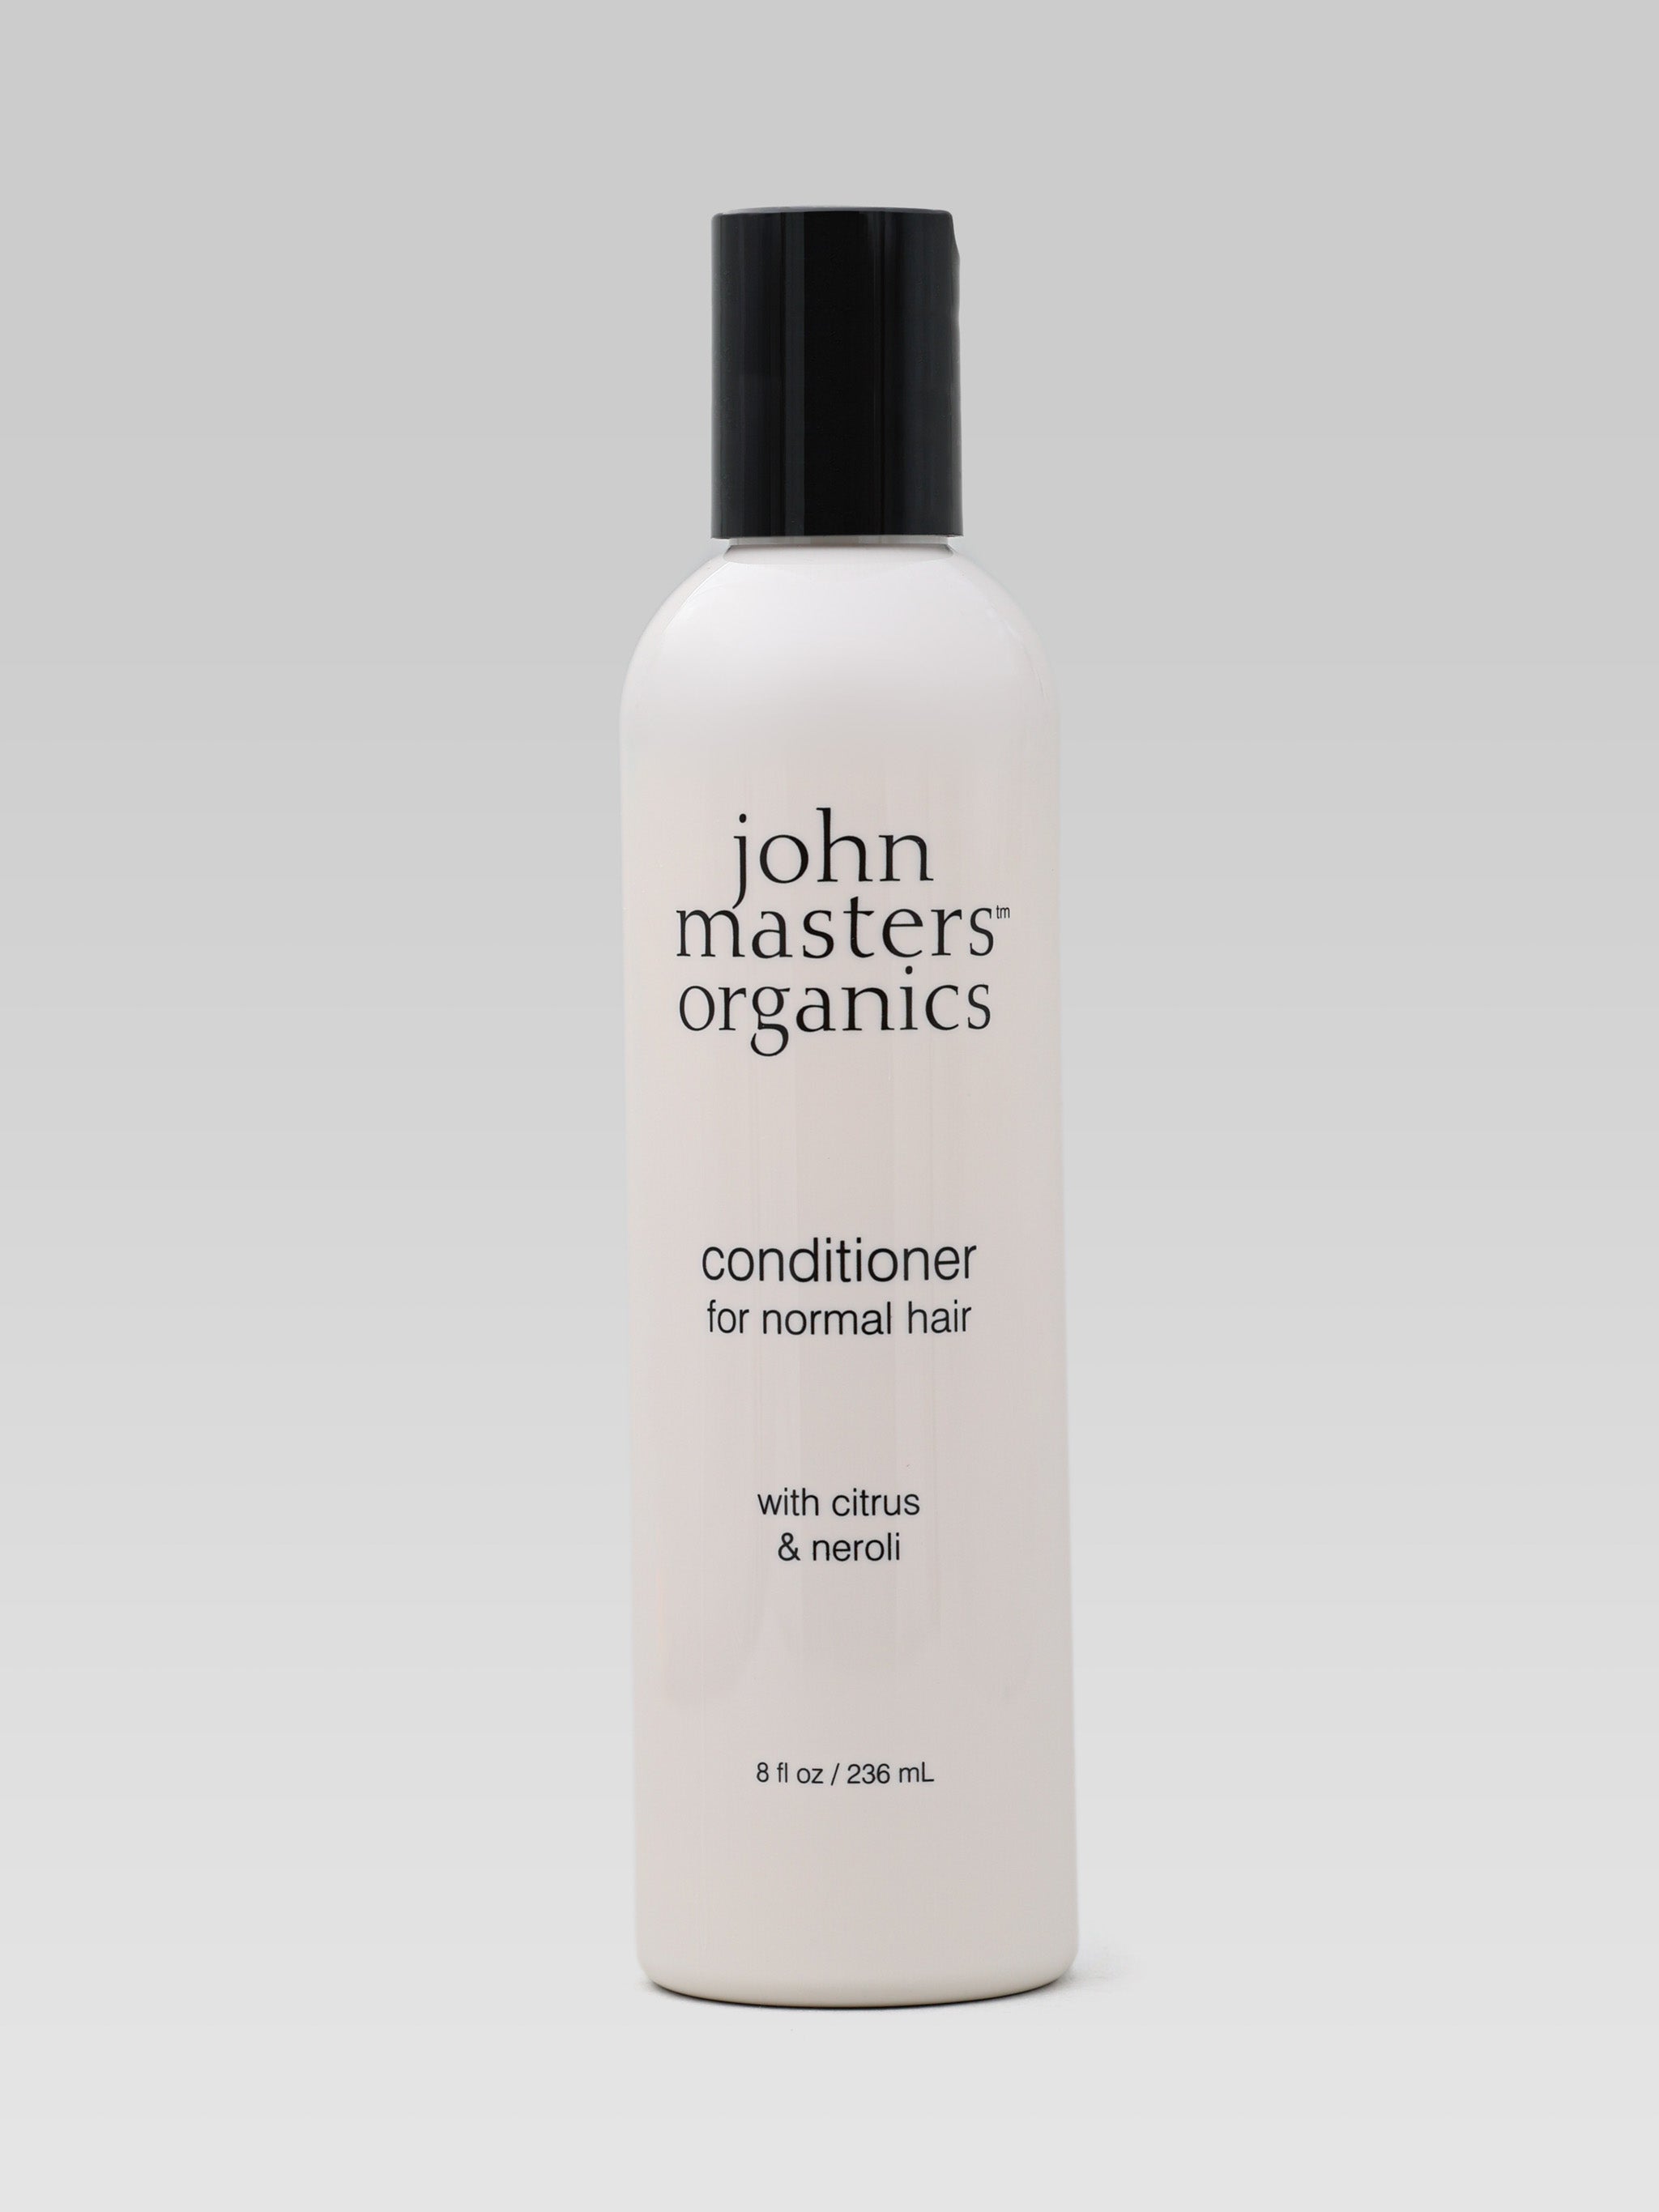 JOHN MASTERS ORGANICS Conditioner for Normal Hair